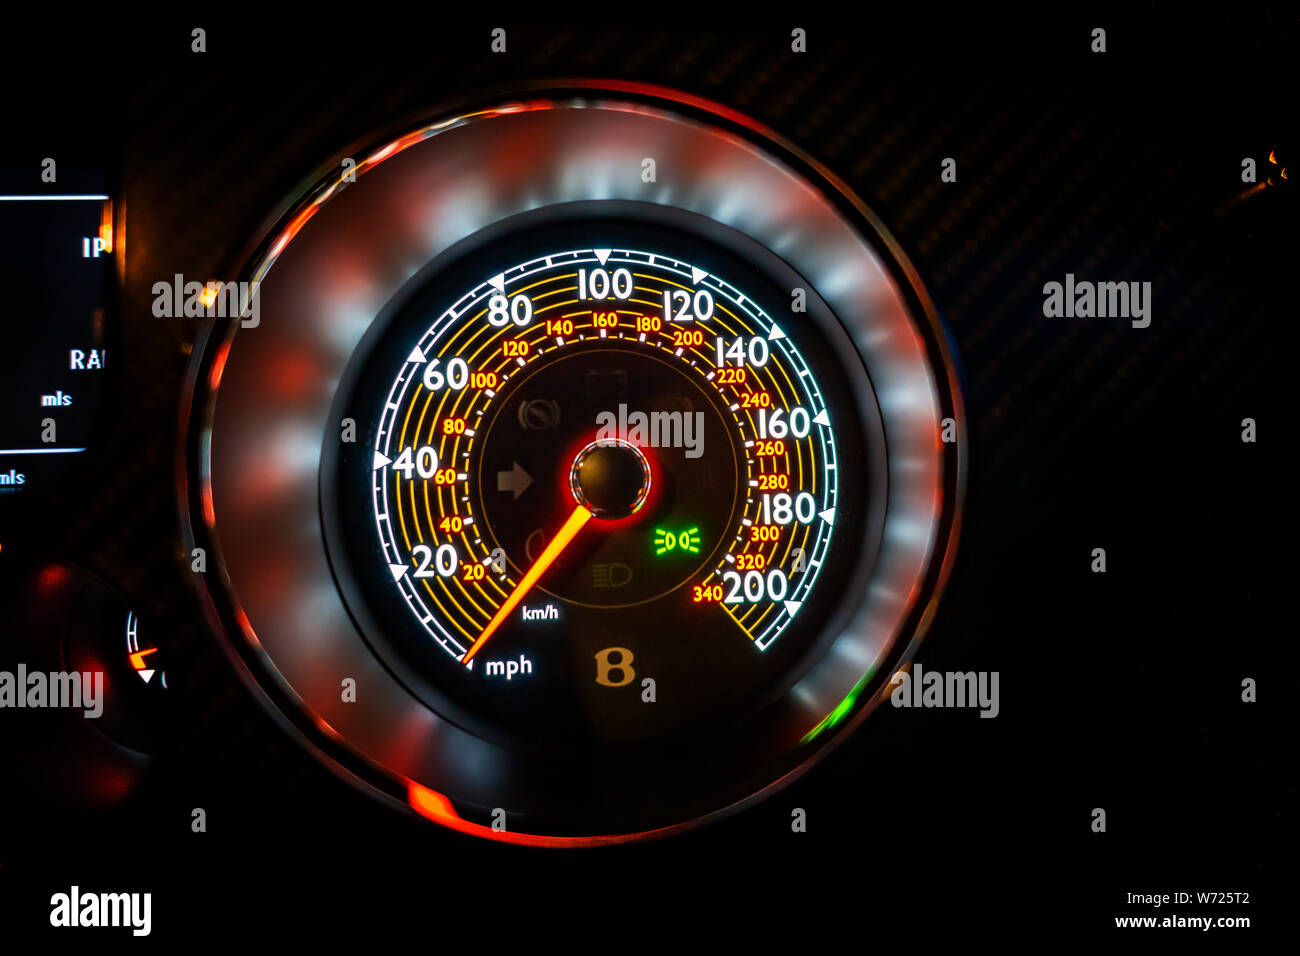 Illuminated speedometer of a Bentley Continental GTC Supersport car interior Stock Photo